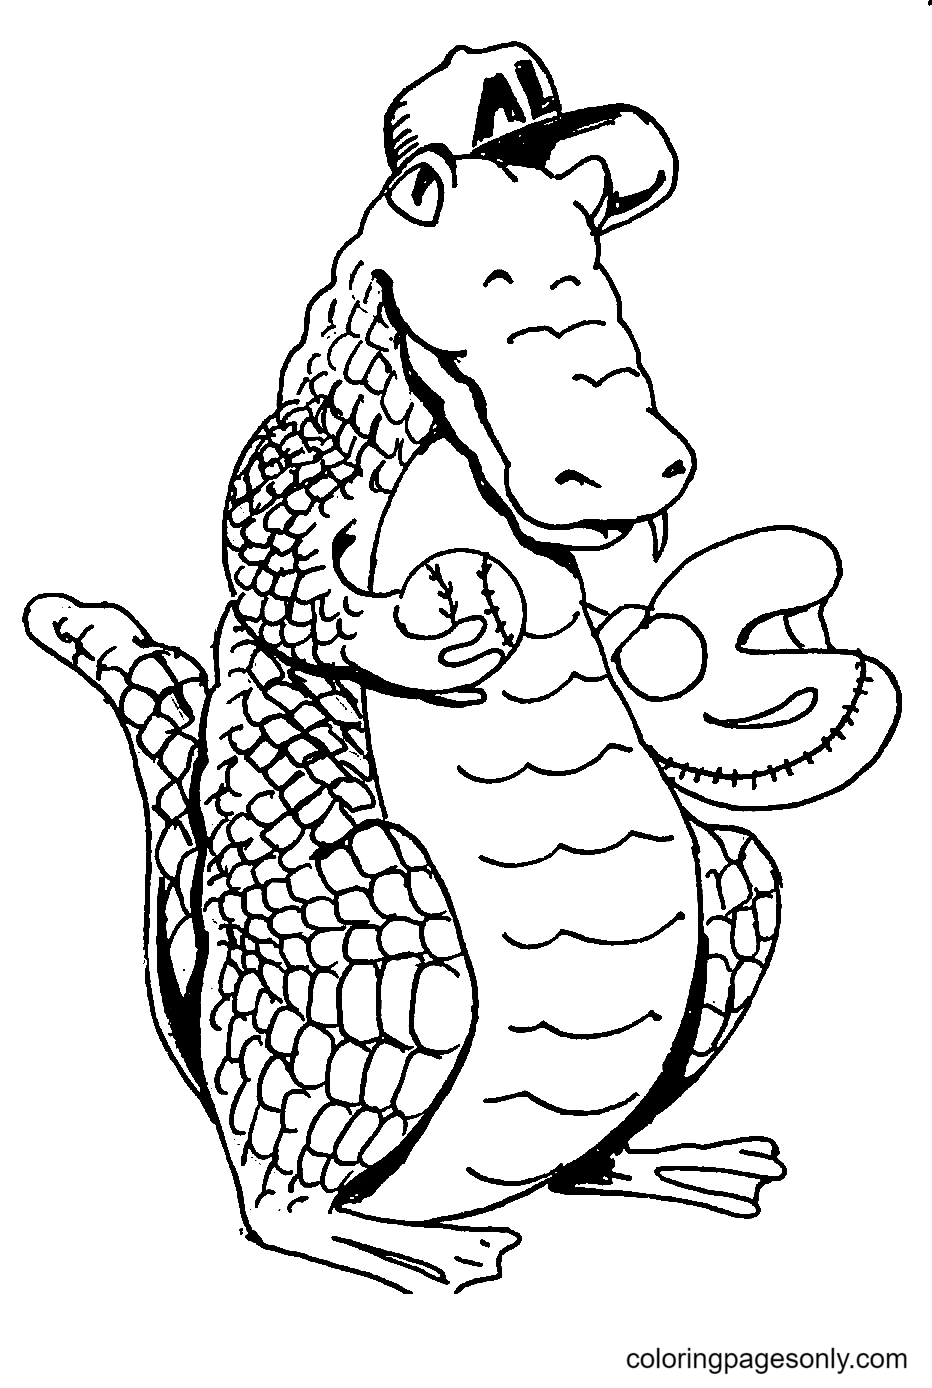 Cartoon Alligator Baseballer Coloring Pages